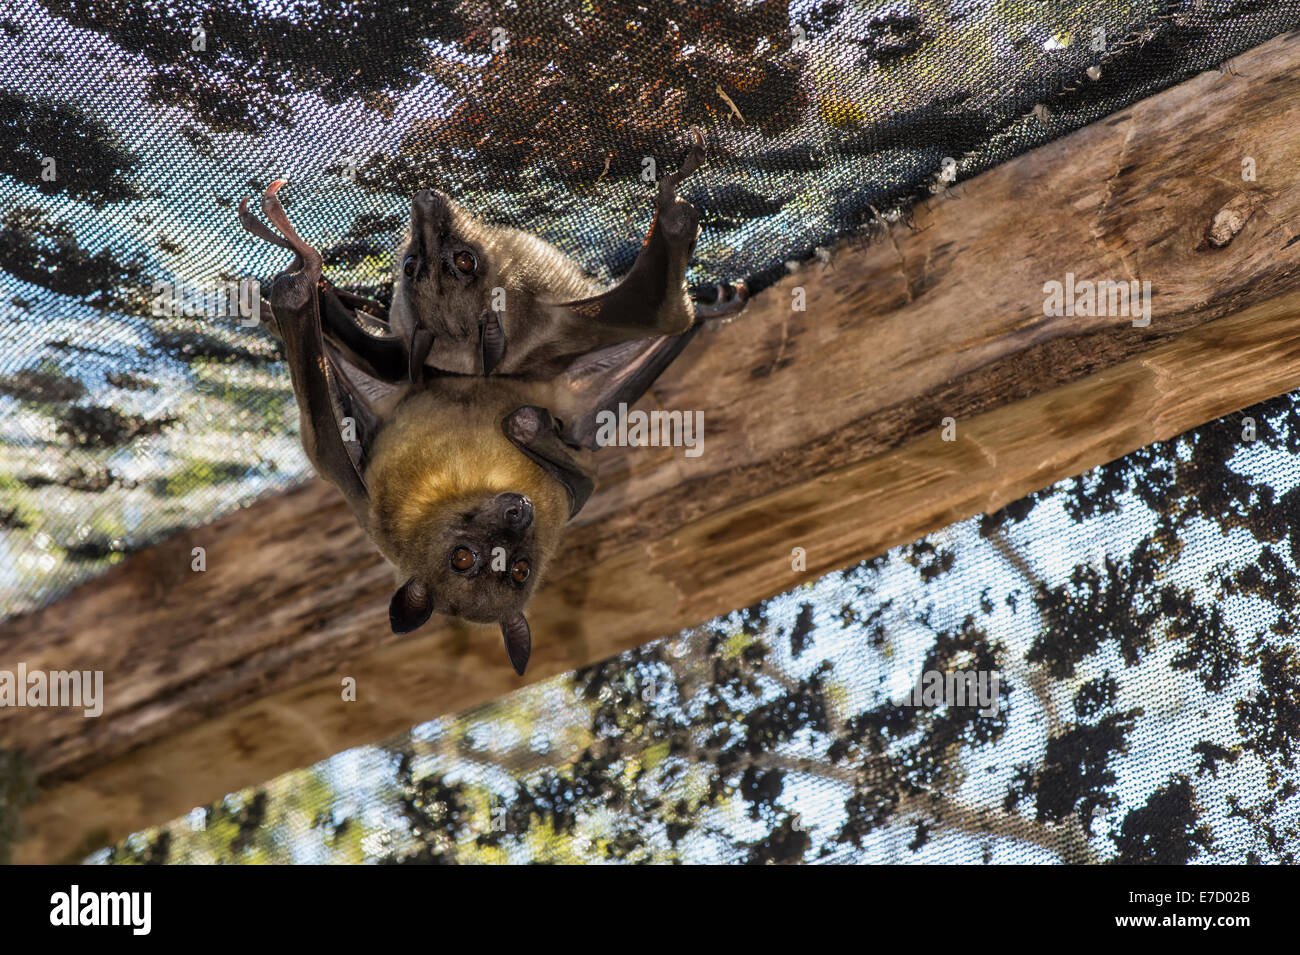 Madagascar Flying Fox or Madagascar Fruit Bats (Pteropus rufus) hanging in a barn, Madagascar Stock Photo